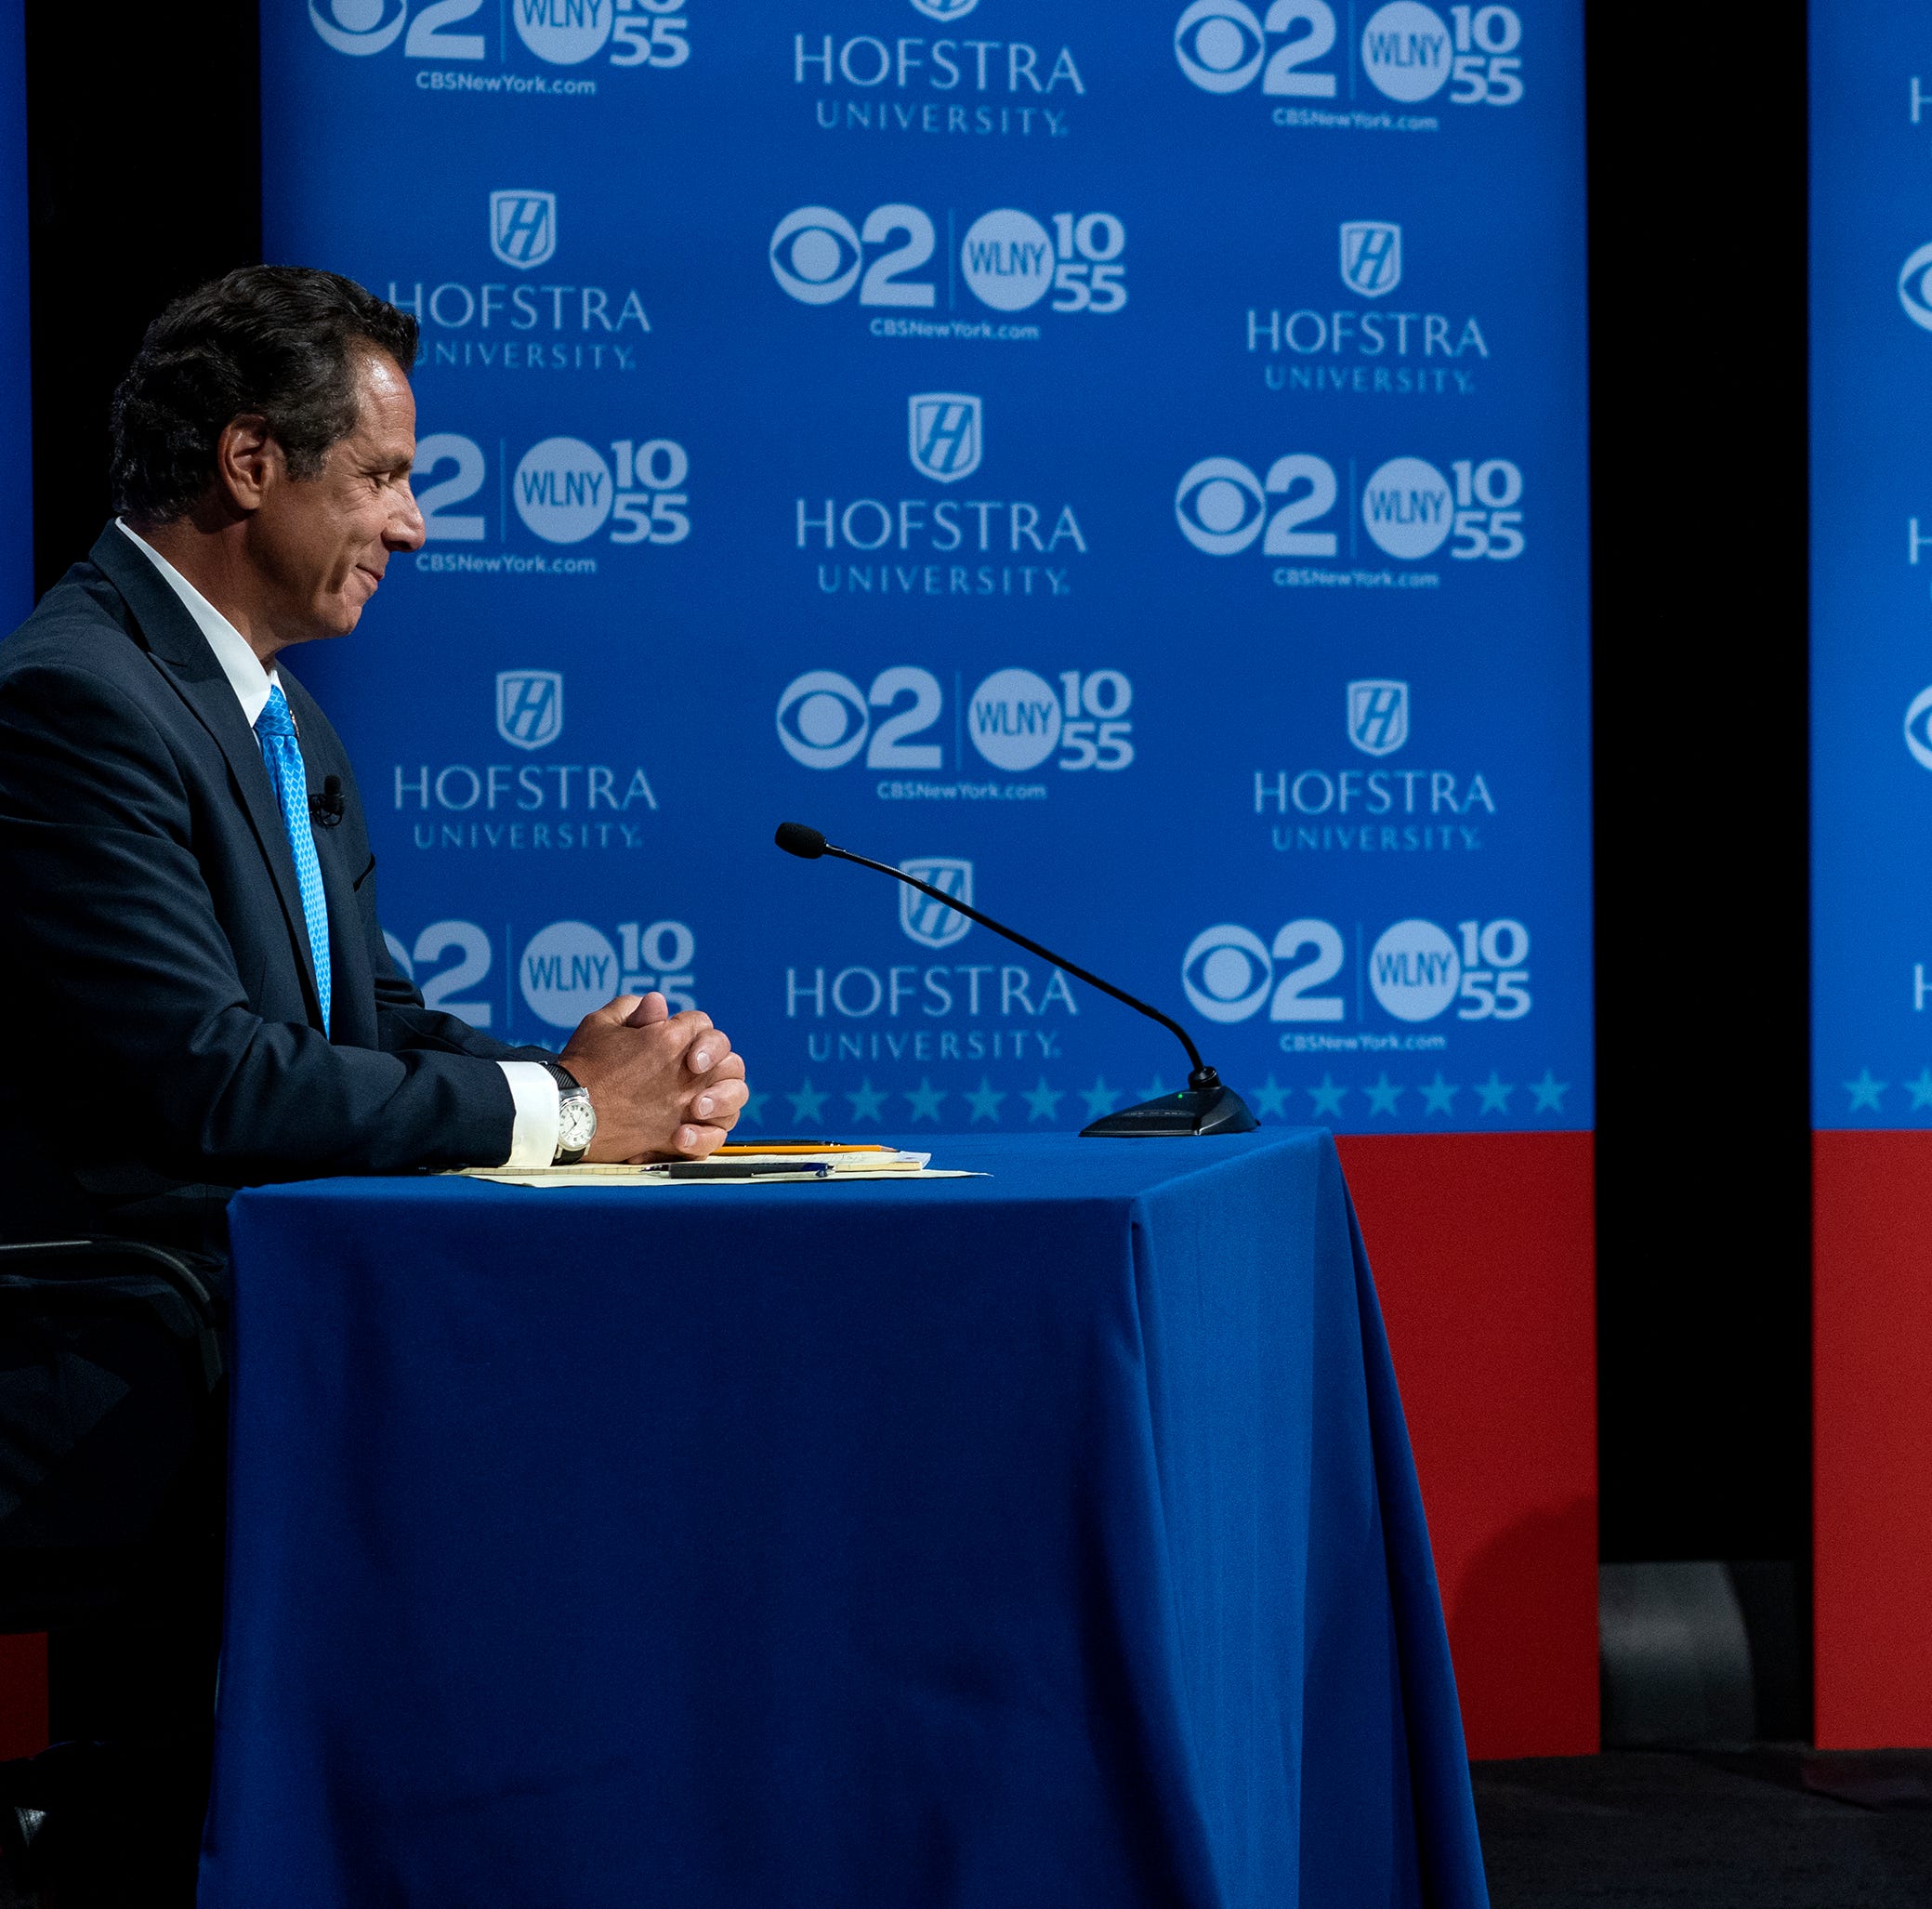 New York Gov. Andrew Cuomo and Democratic New York gubernatorial candidate Cynthia Nixon pause before the start of a gubernatorial debate at Hofstra University in Hempstead, N.Y., Wednesday, Aug. 29, 2018.